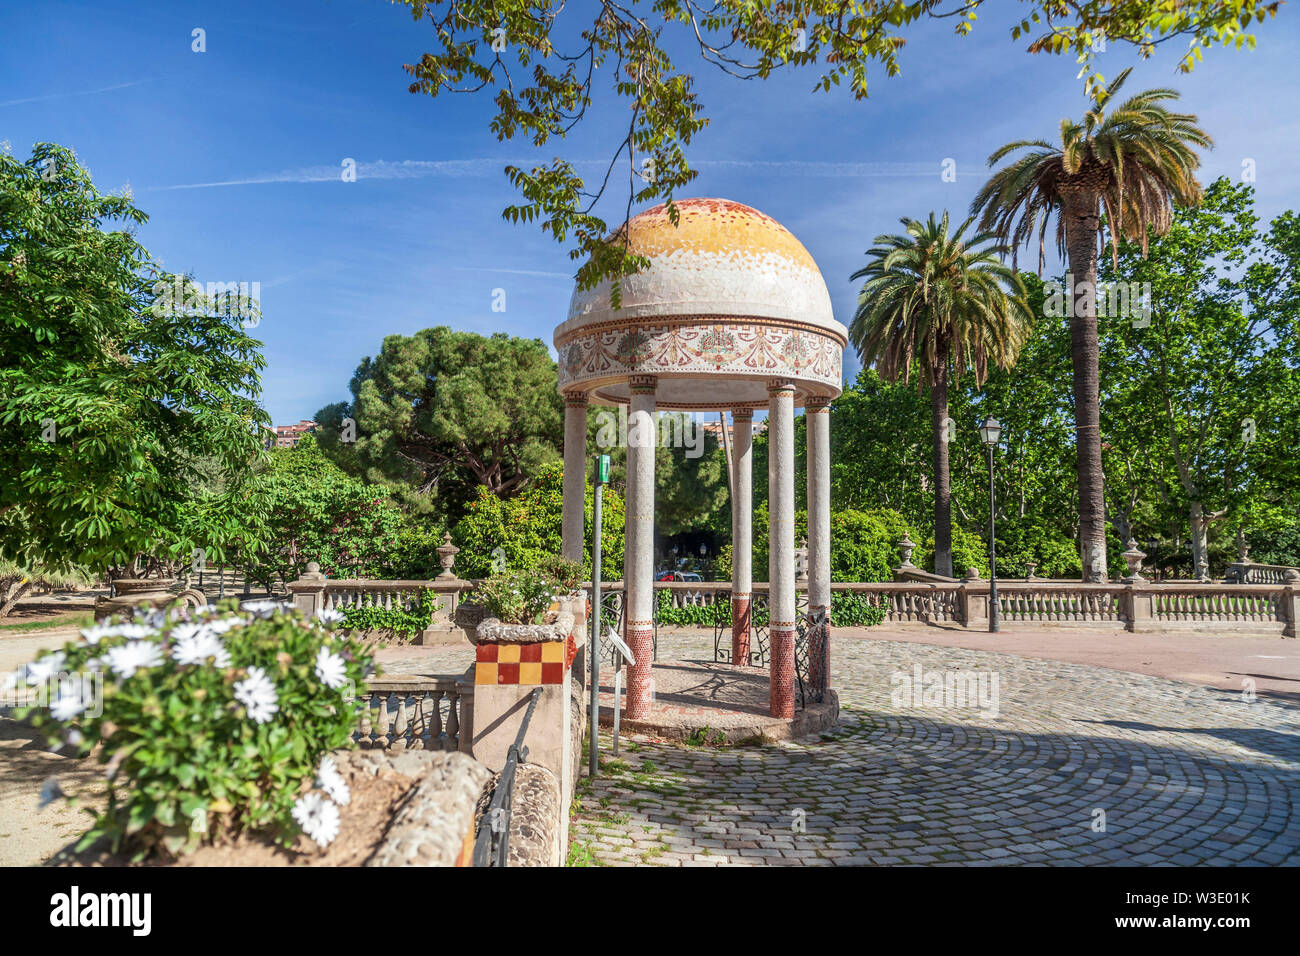 Public Garden Park, Parc können Buxeres in Hospitalet de Llobregat, Katalonien, Spanien. Stockfoto